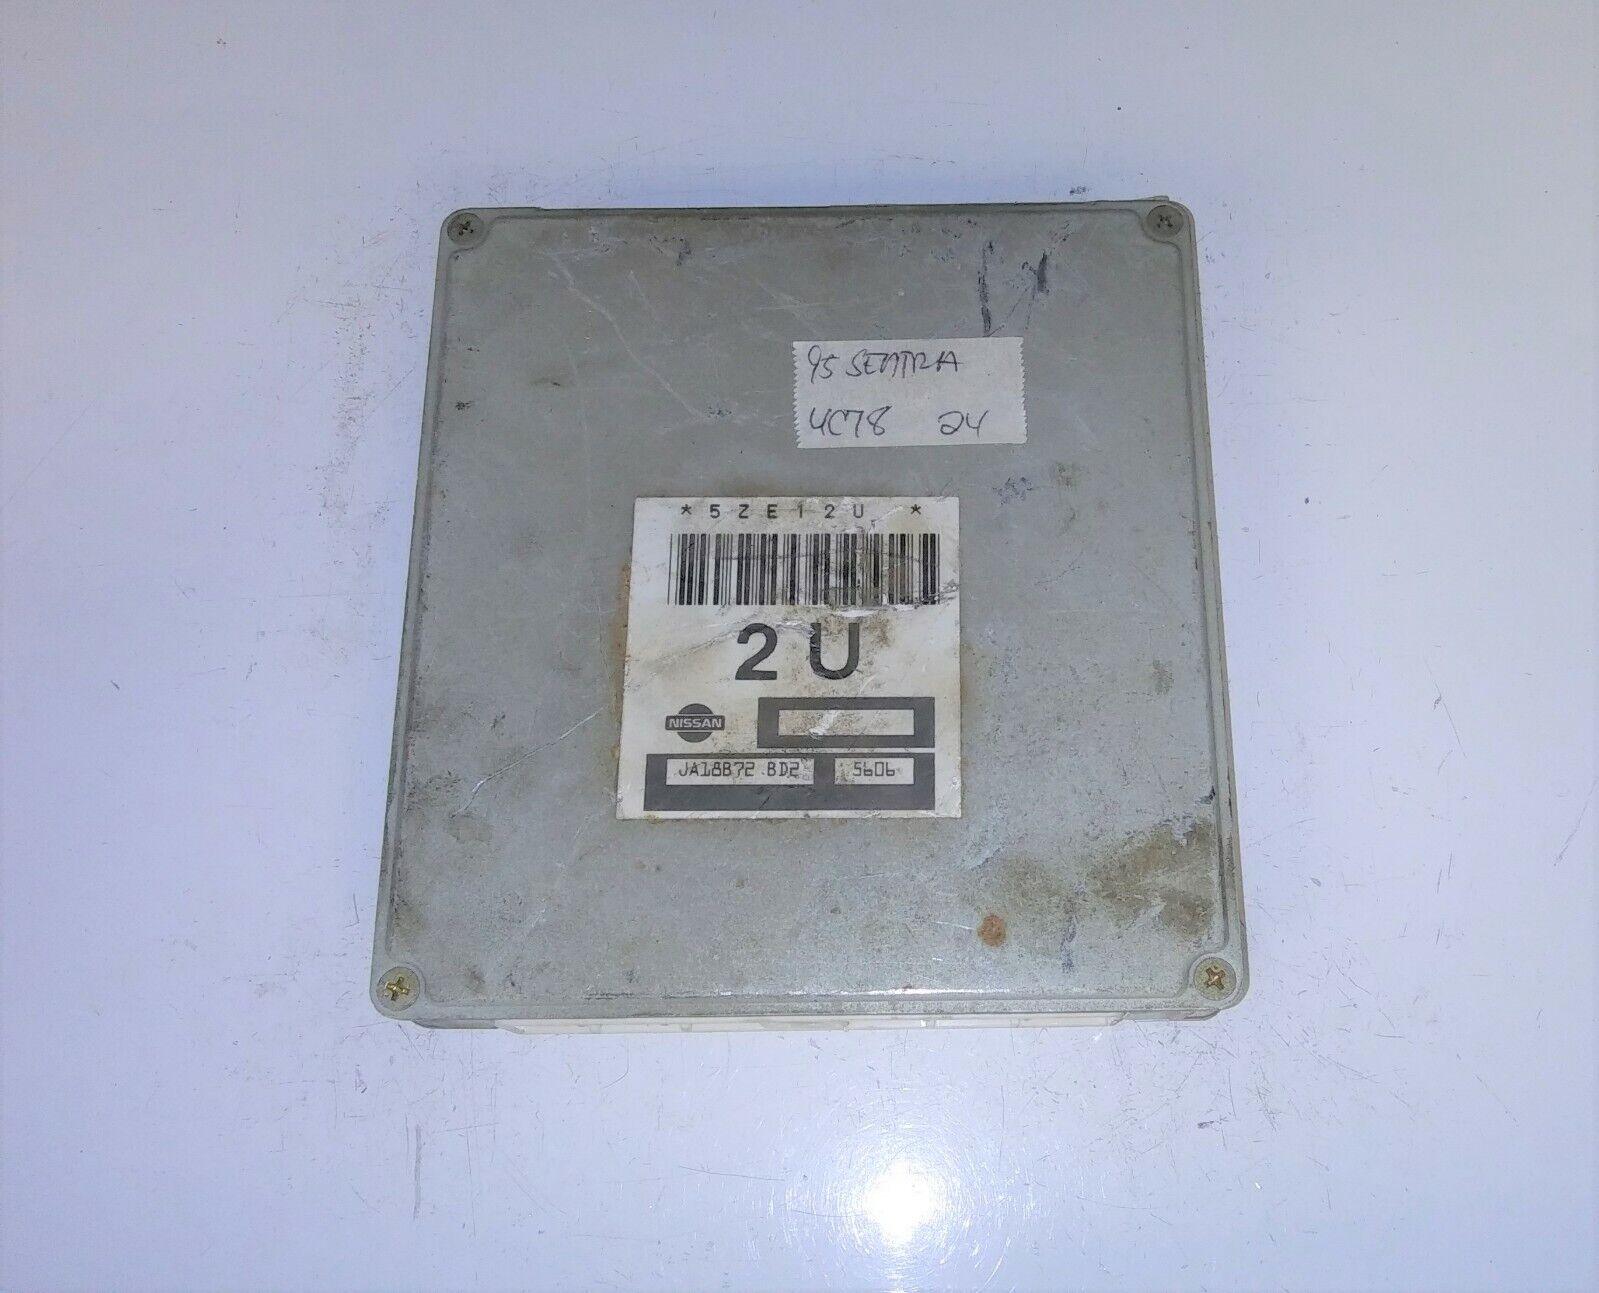 1995 Nissan Sentra ecu ecm computer JA18B72 BD2.